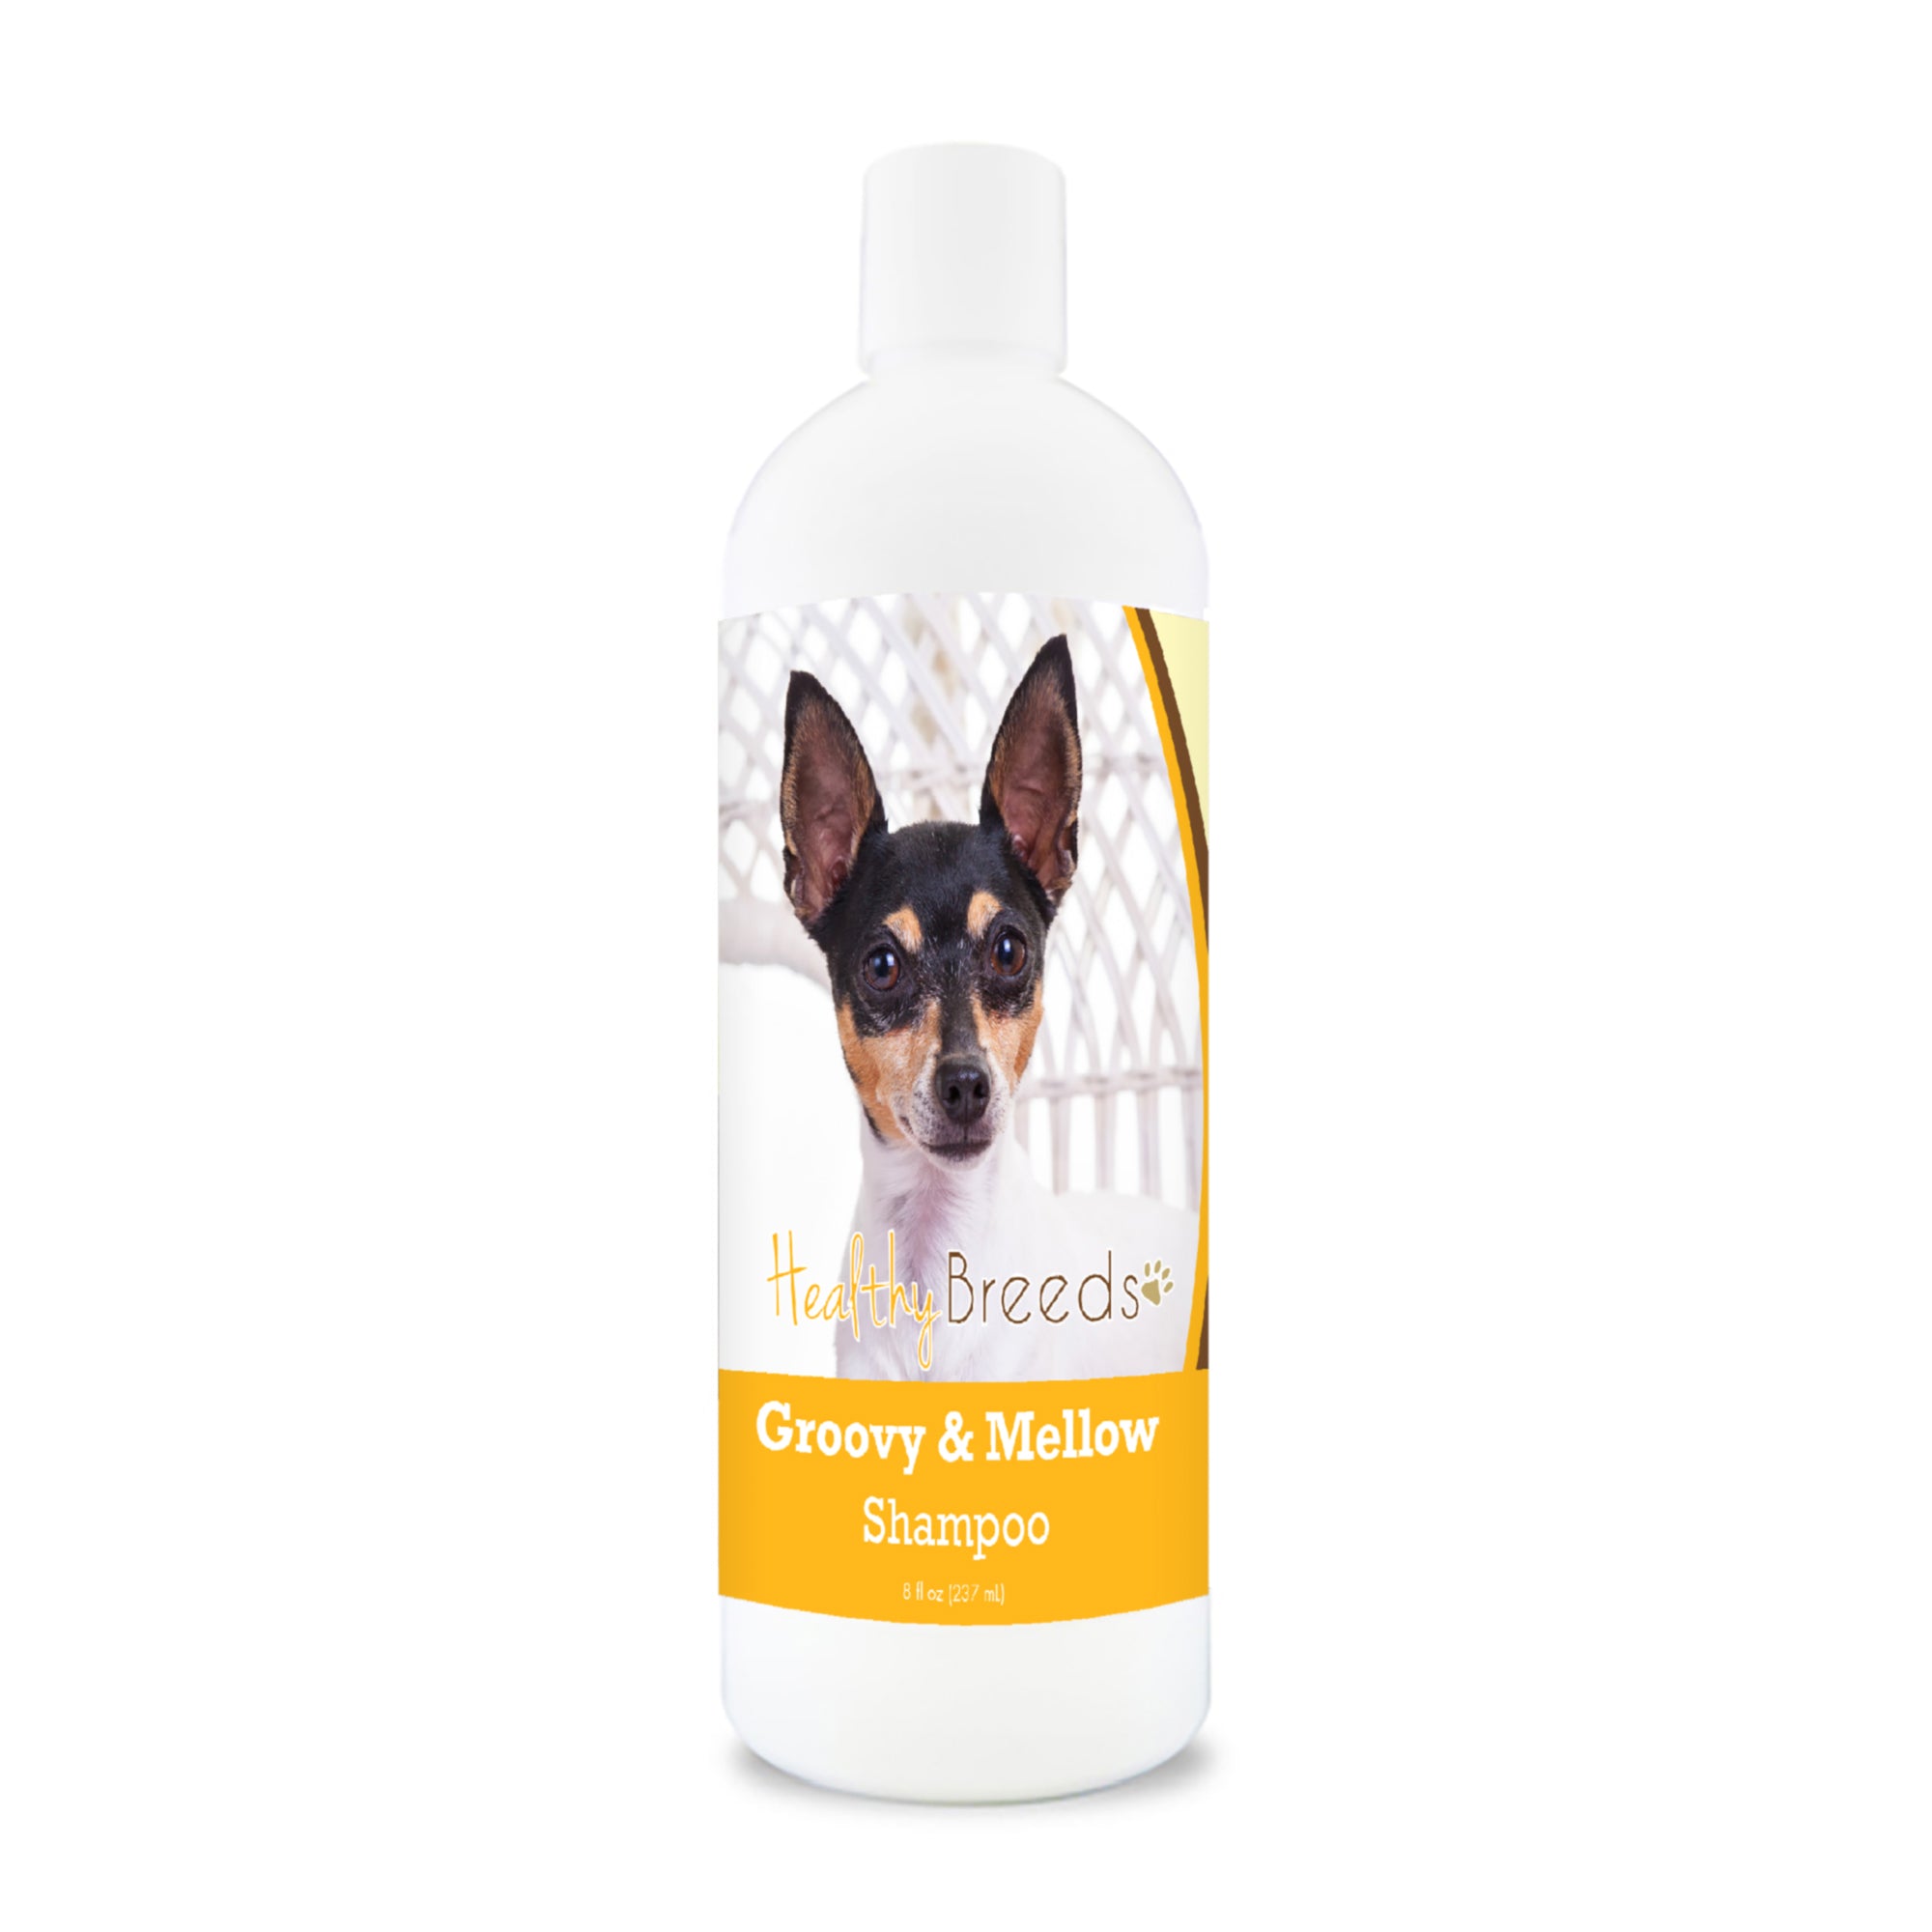 Toy Fox Terrier Groovy & Mellow Shampoo 8 oz